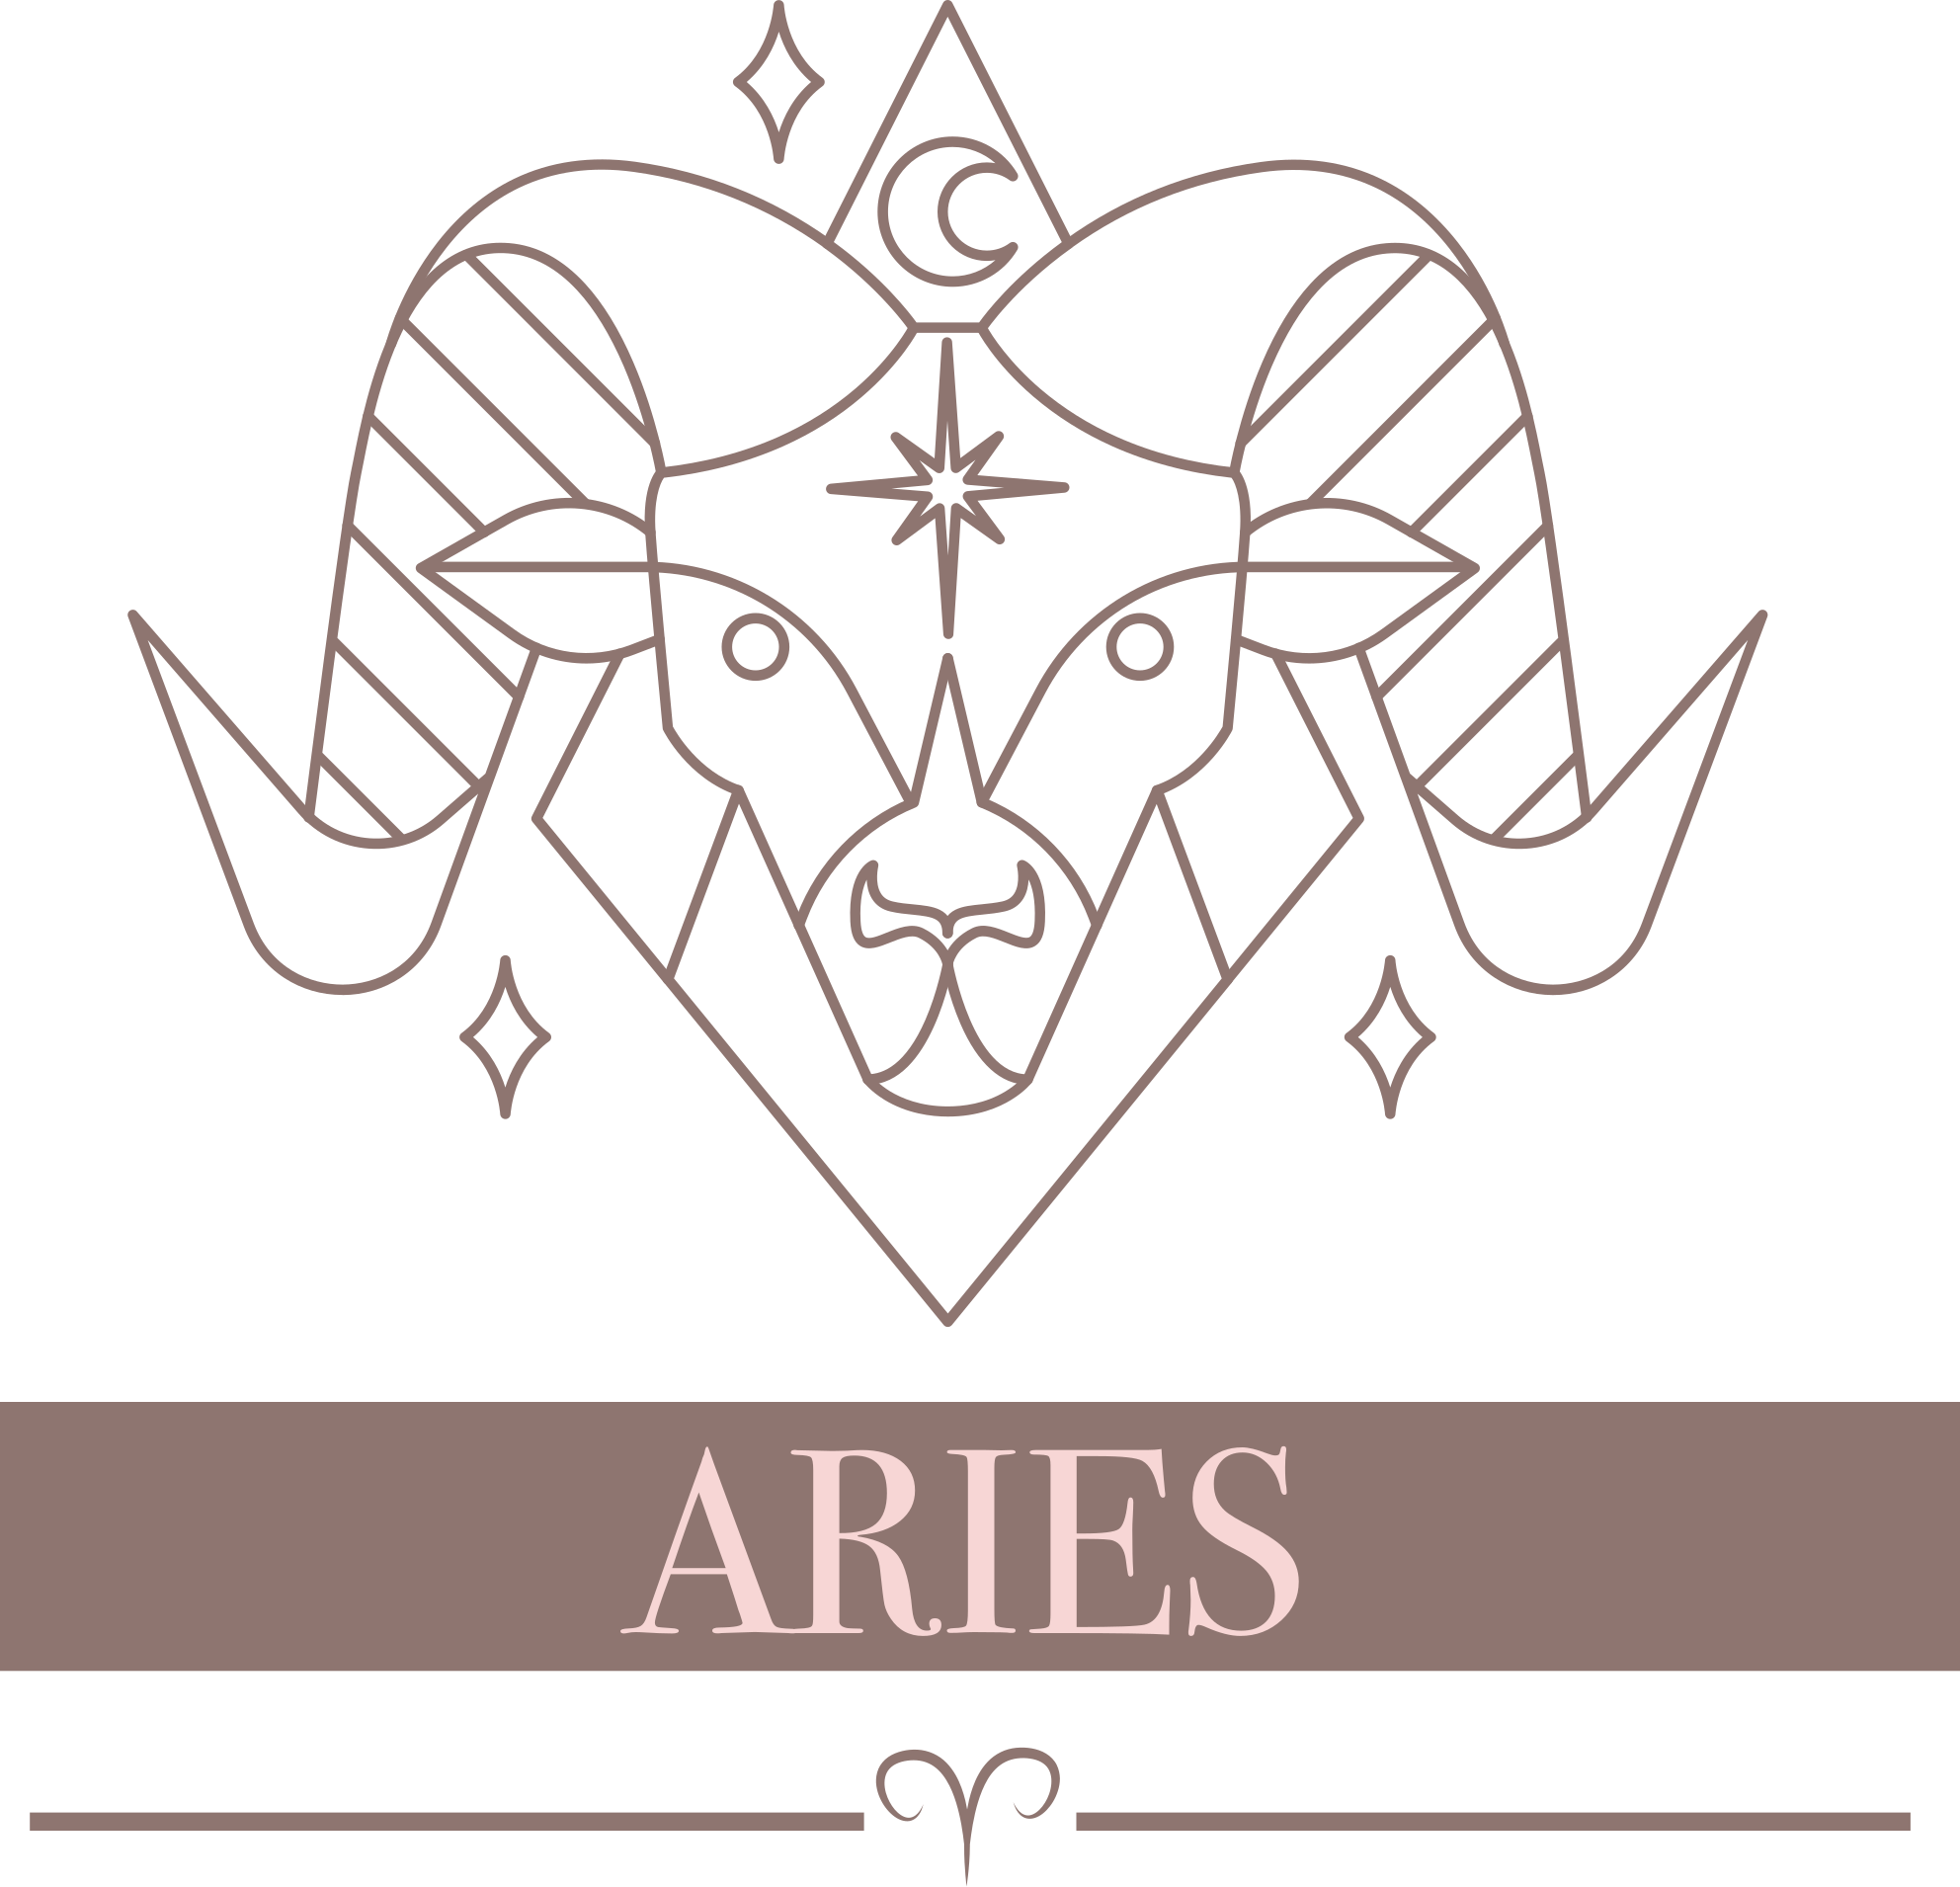 aries symbol pink